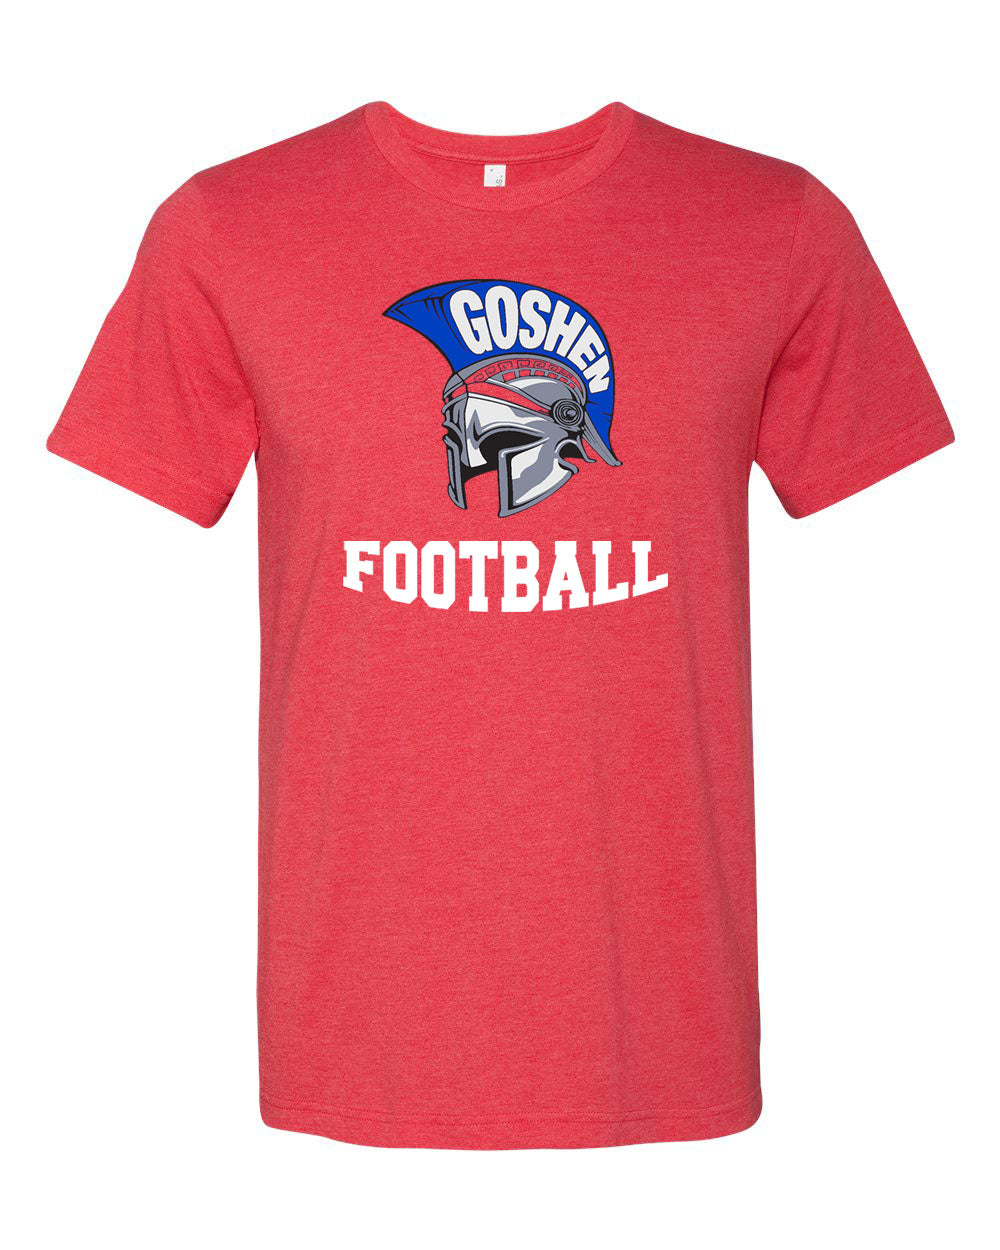 Goshen Head Football t-Shirt